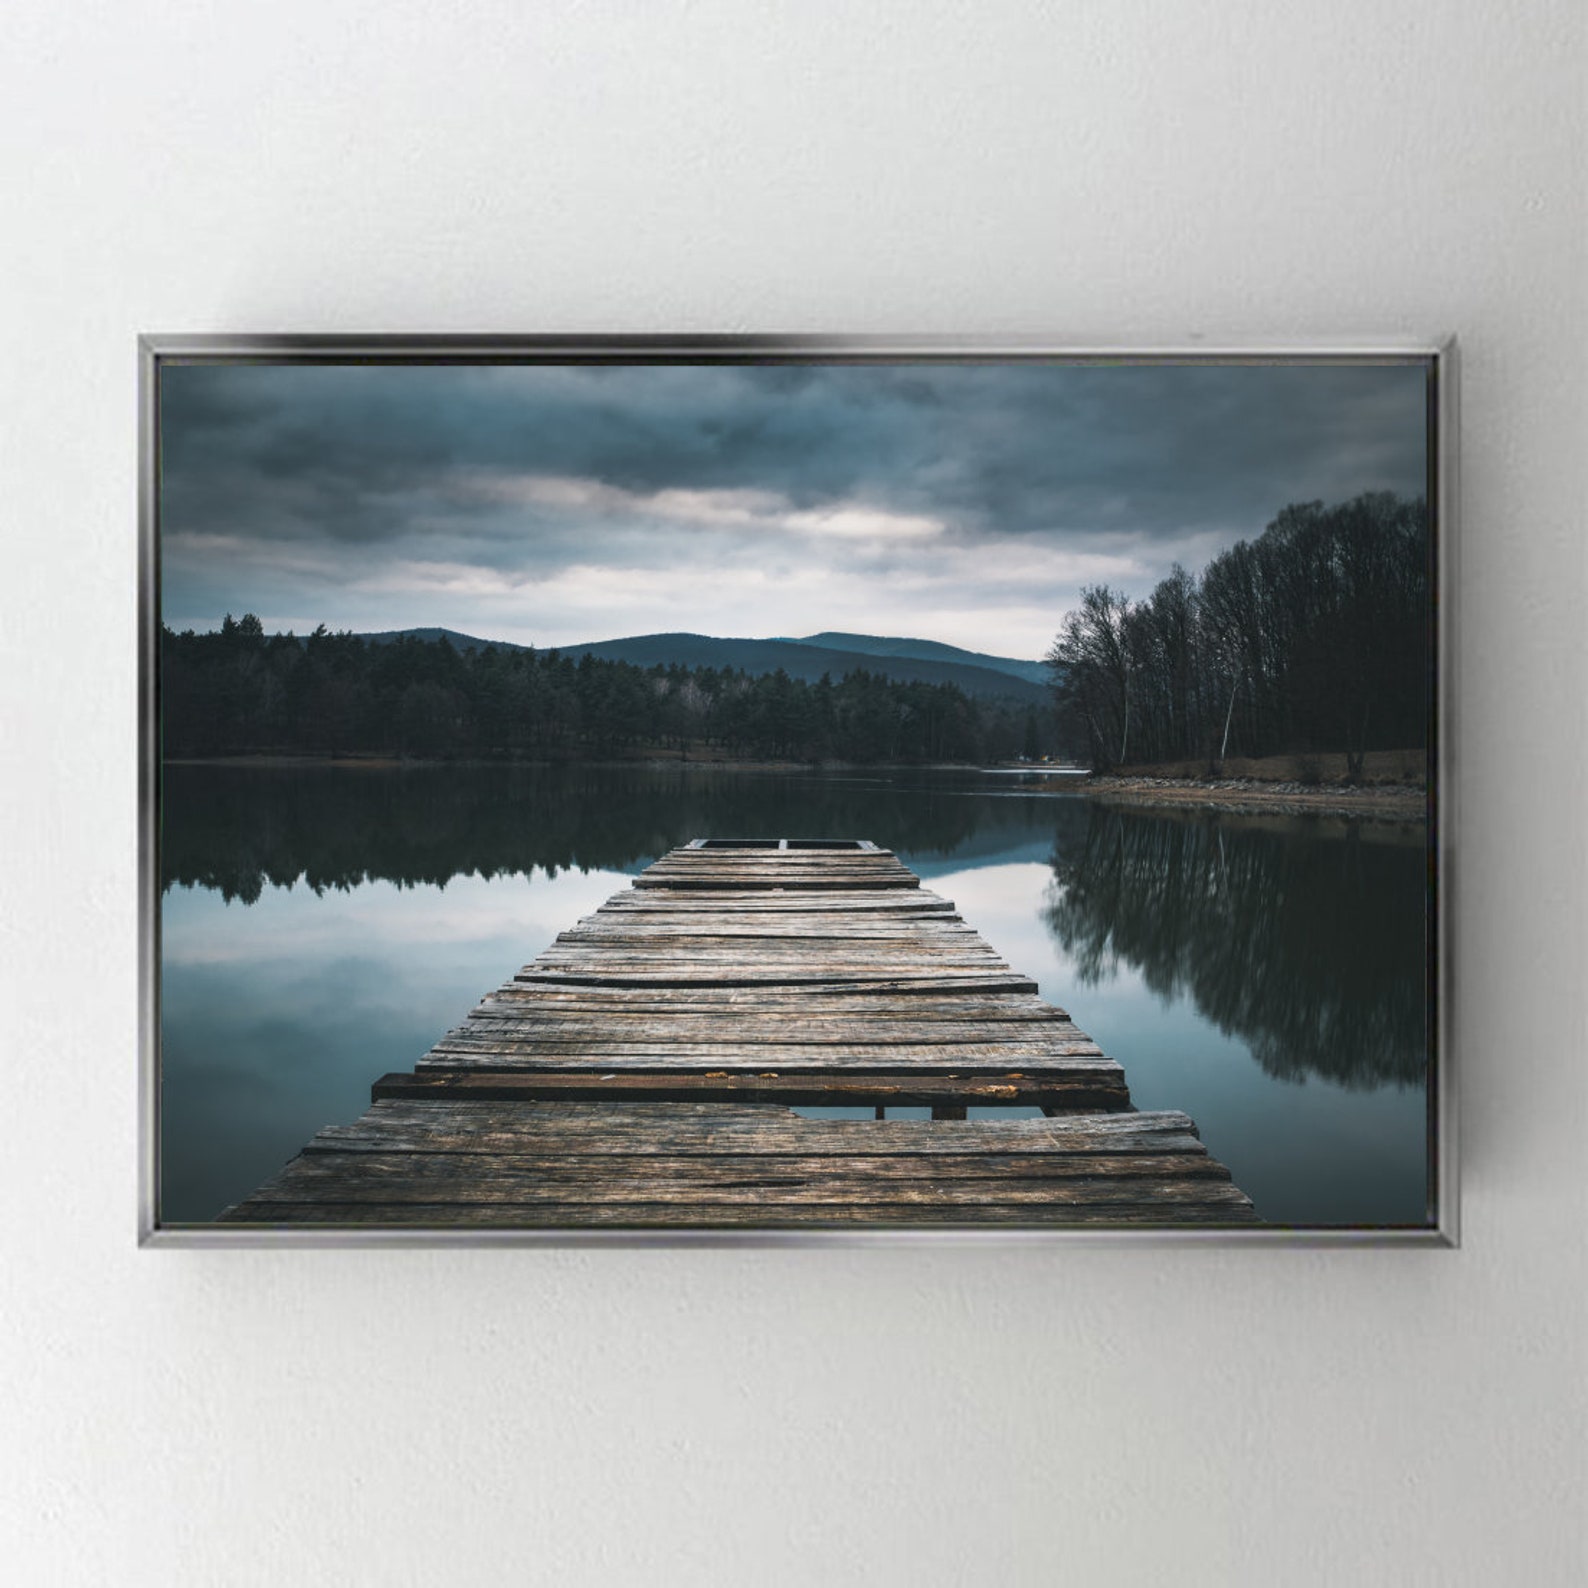 Dock on the LakeNature Landscape Scenery Print on Canvas | Etsy